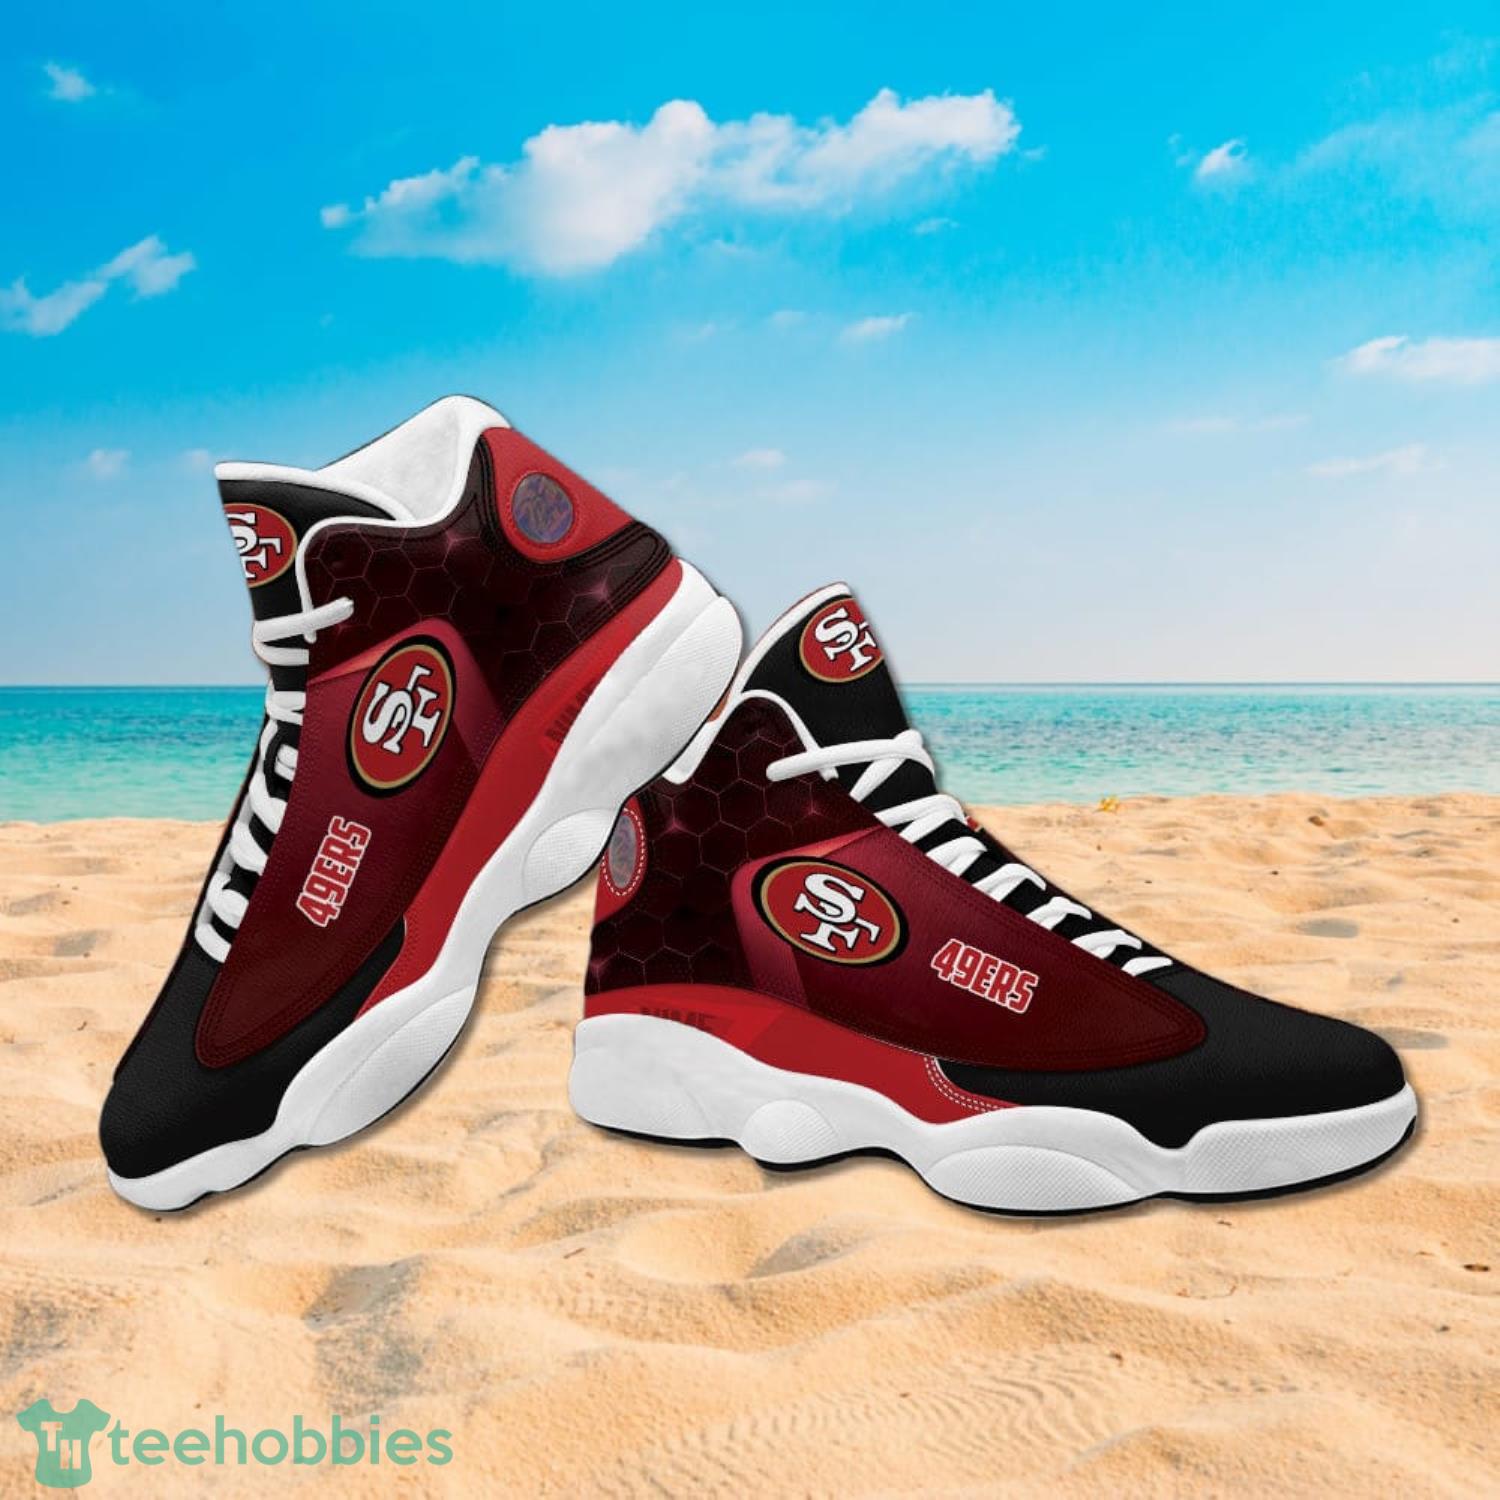 San Francisco 49ers Custom Name Air Jordan 13 Shoes Sneaker - DNstyles